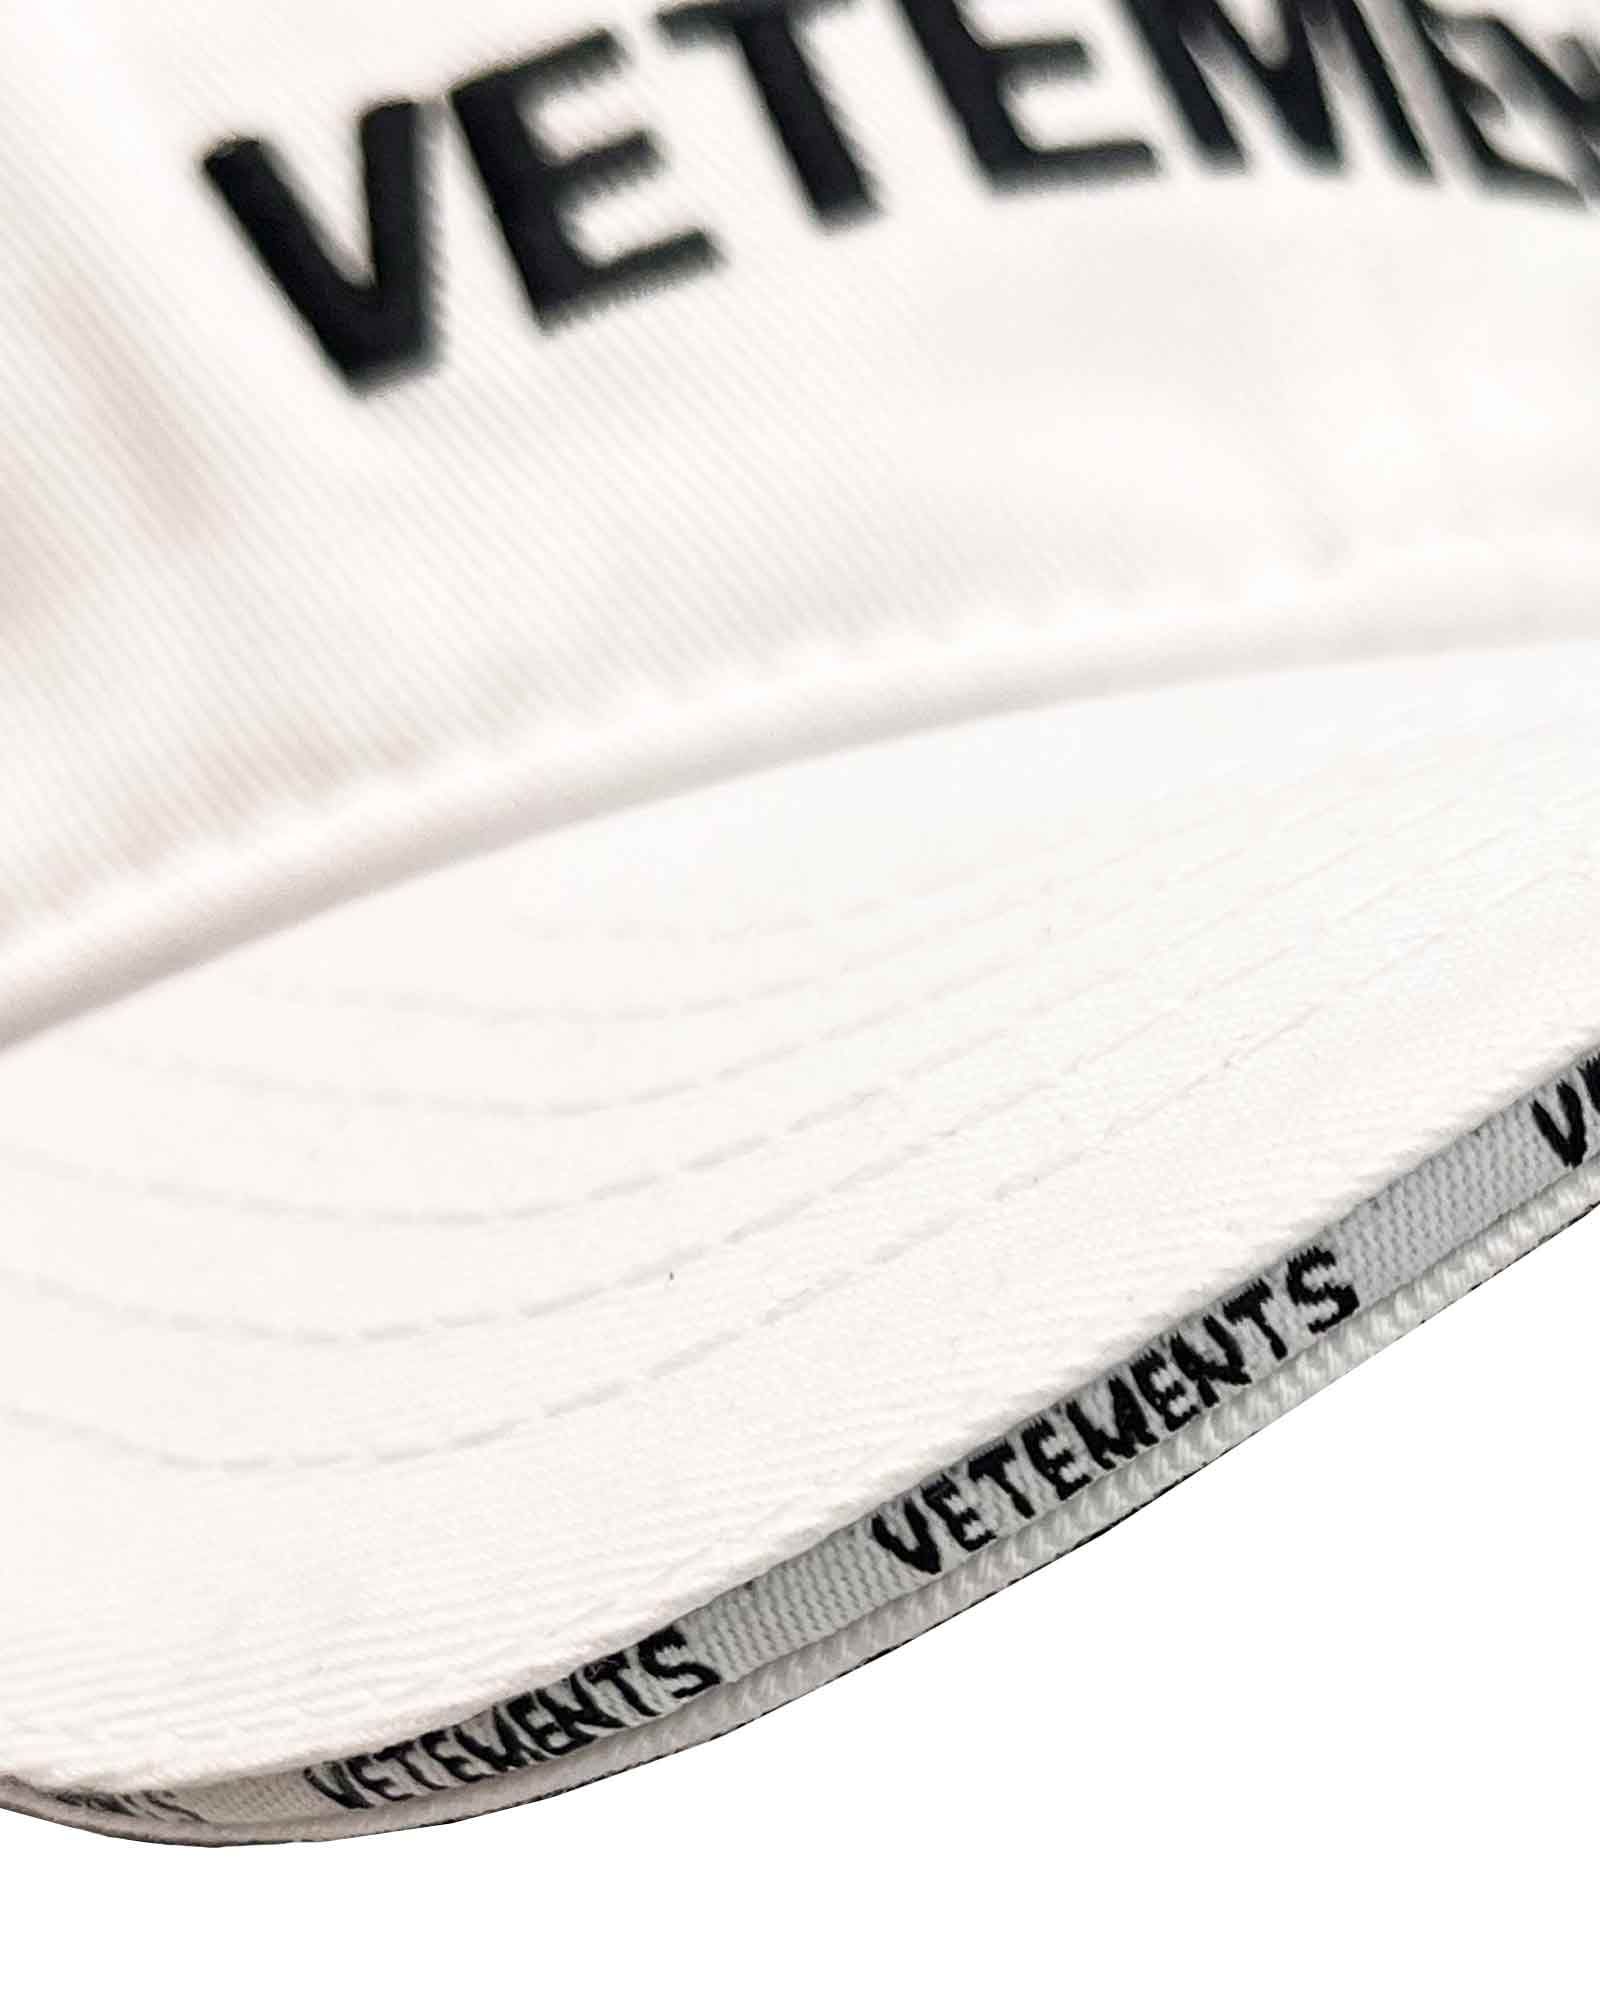 VETEMENTS - Iconic logo cap (ロゴキャップ) White | Detail